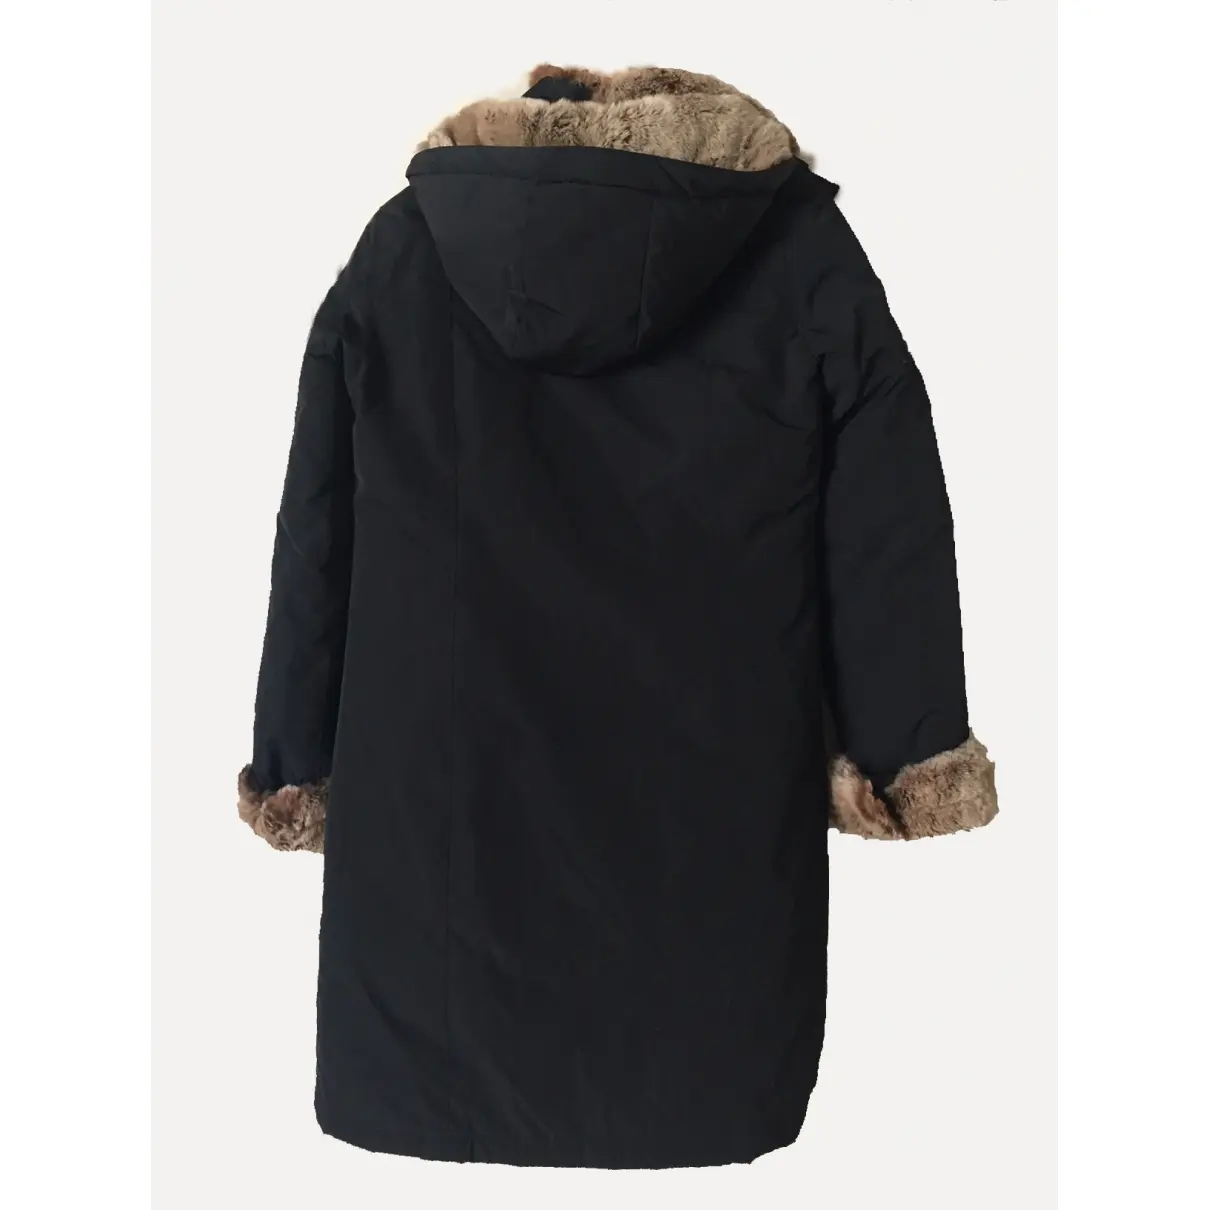 Buy Woolrich Black Polyester Coat online